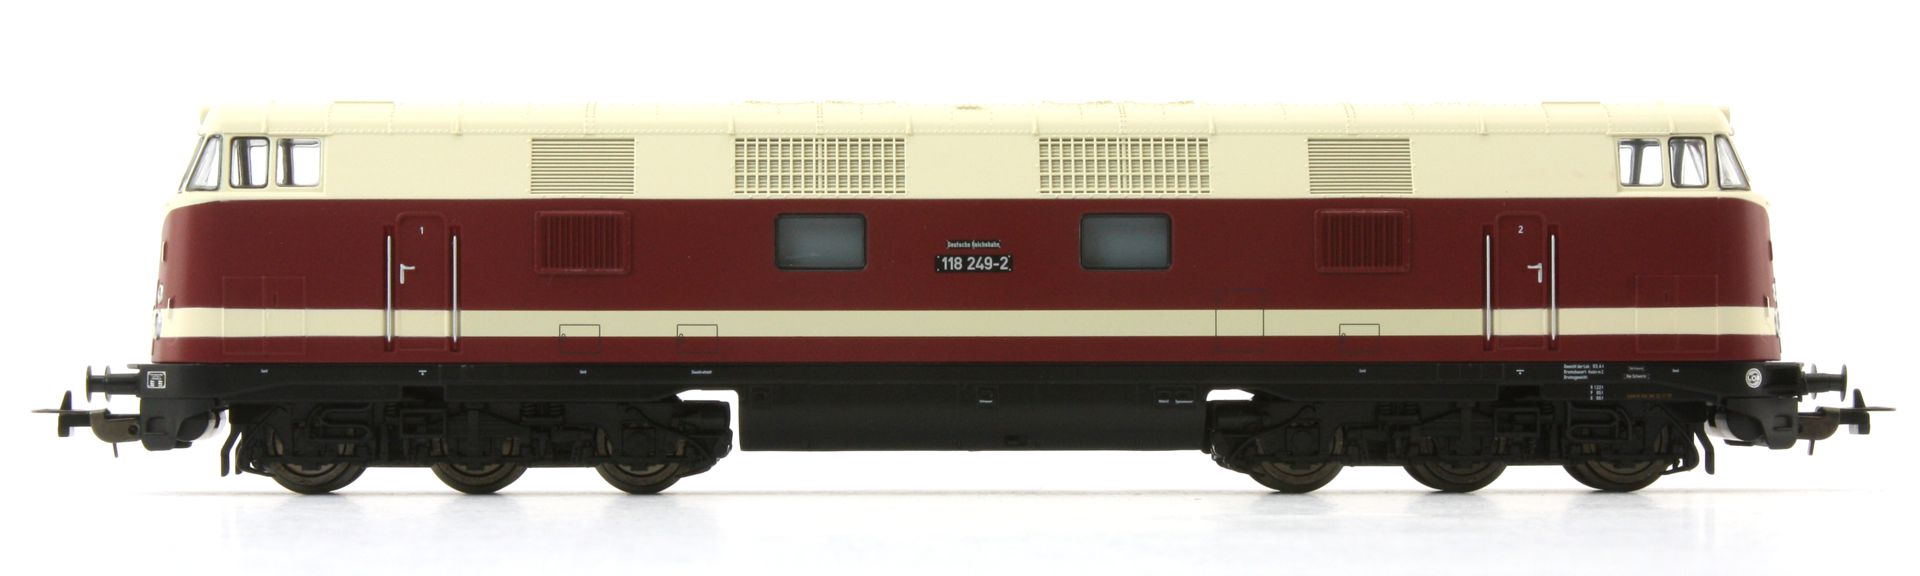 Piko 59580-9 - Diesellok 118 249-2, DR, Ep.IV